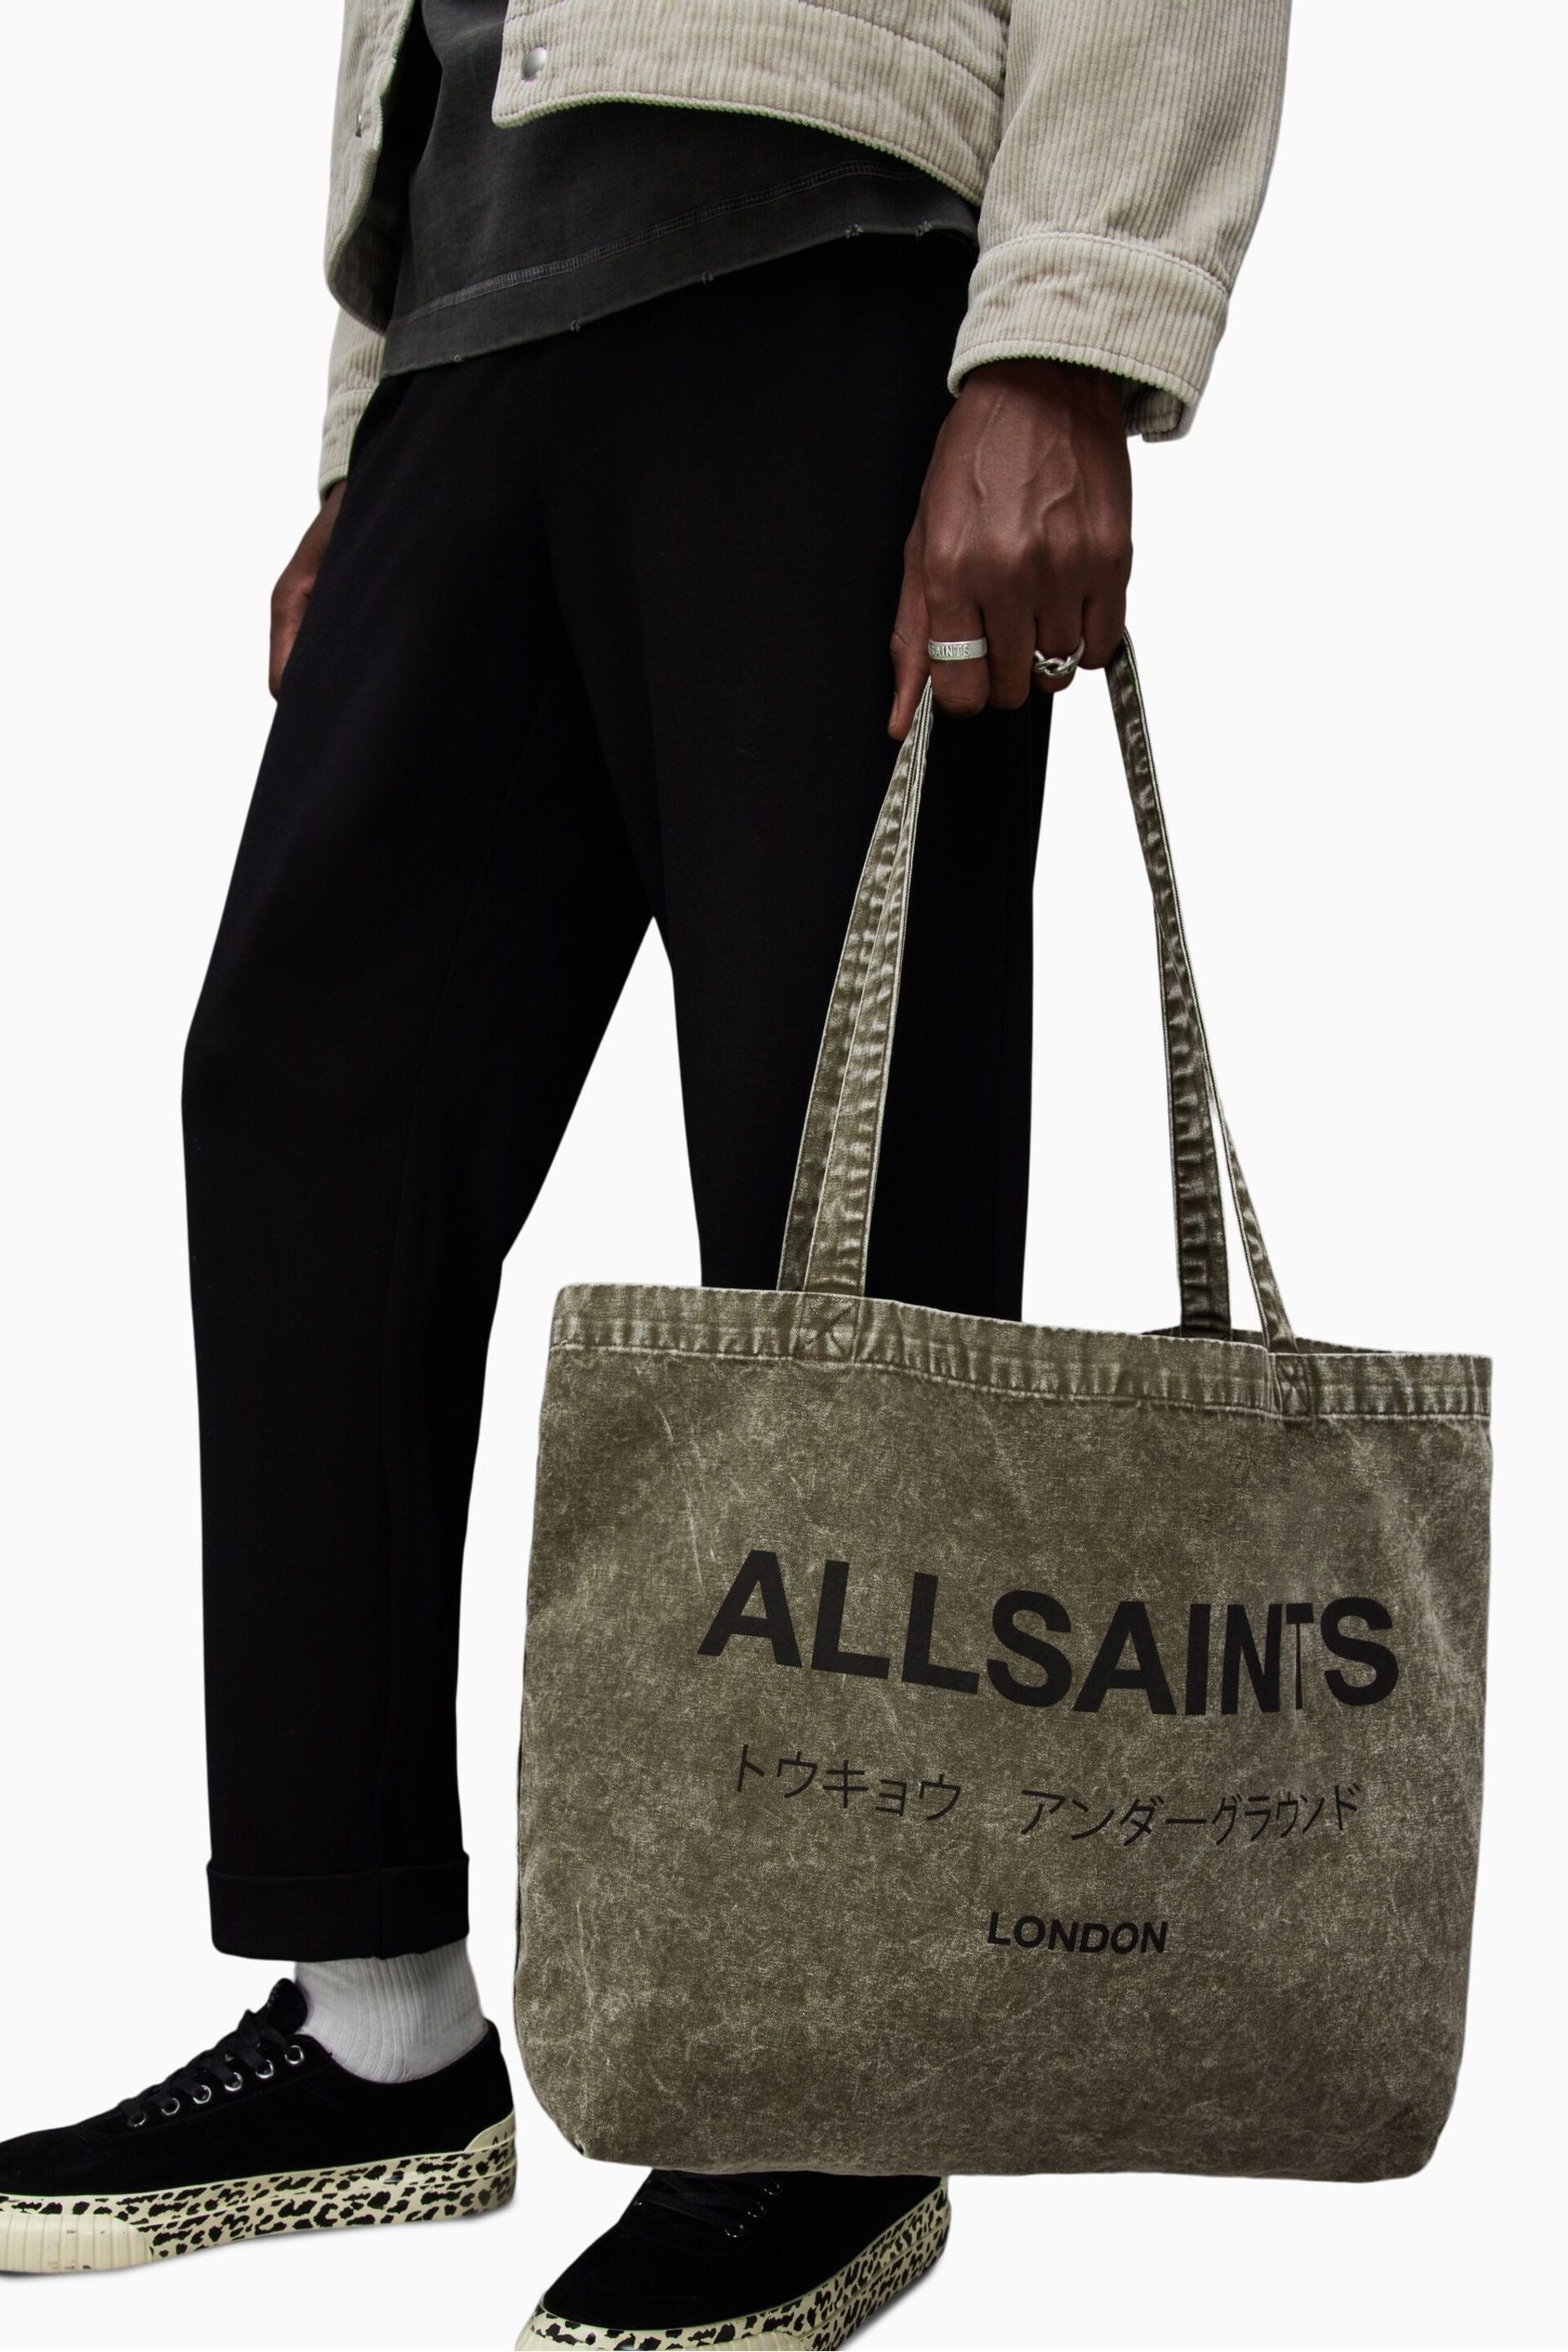 AllSaints Black Underground ACI Tote Bag - Image 1 of 6